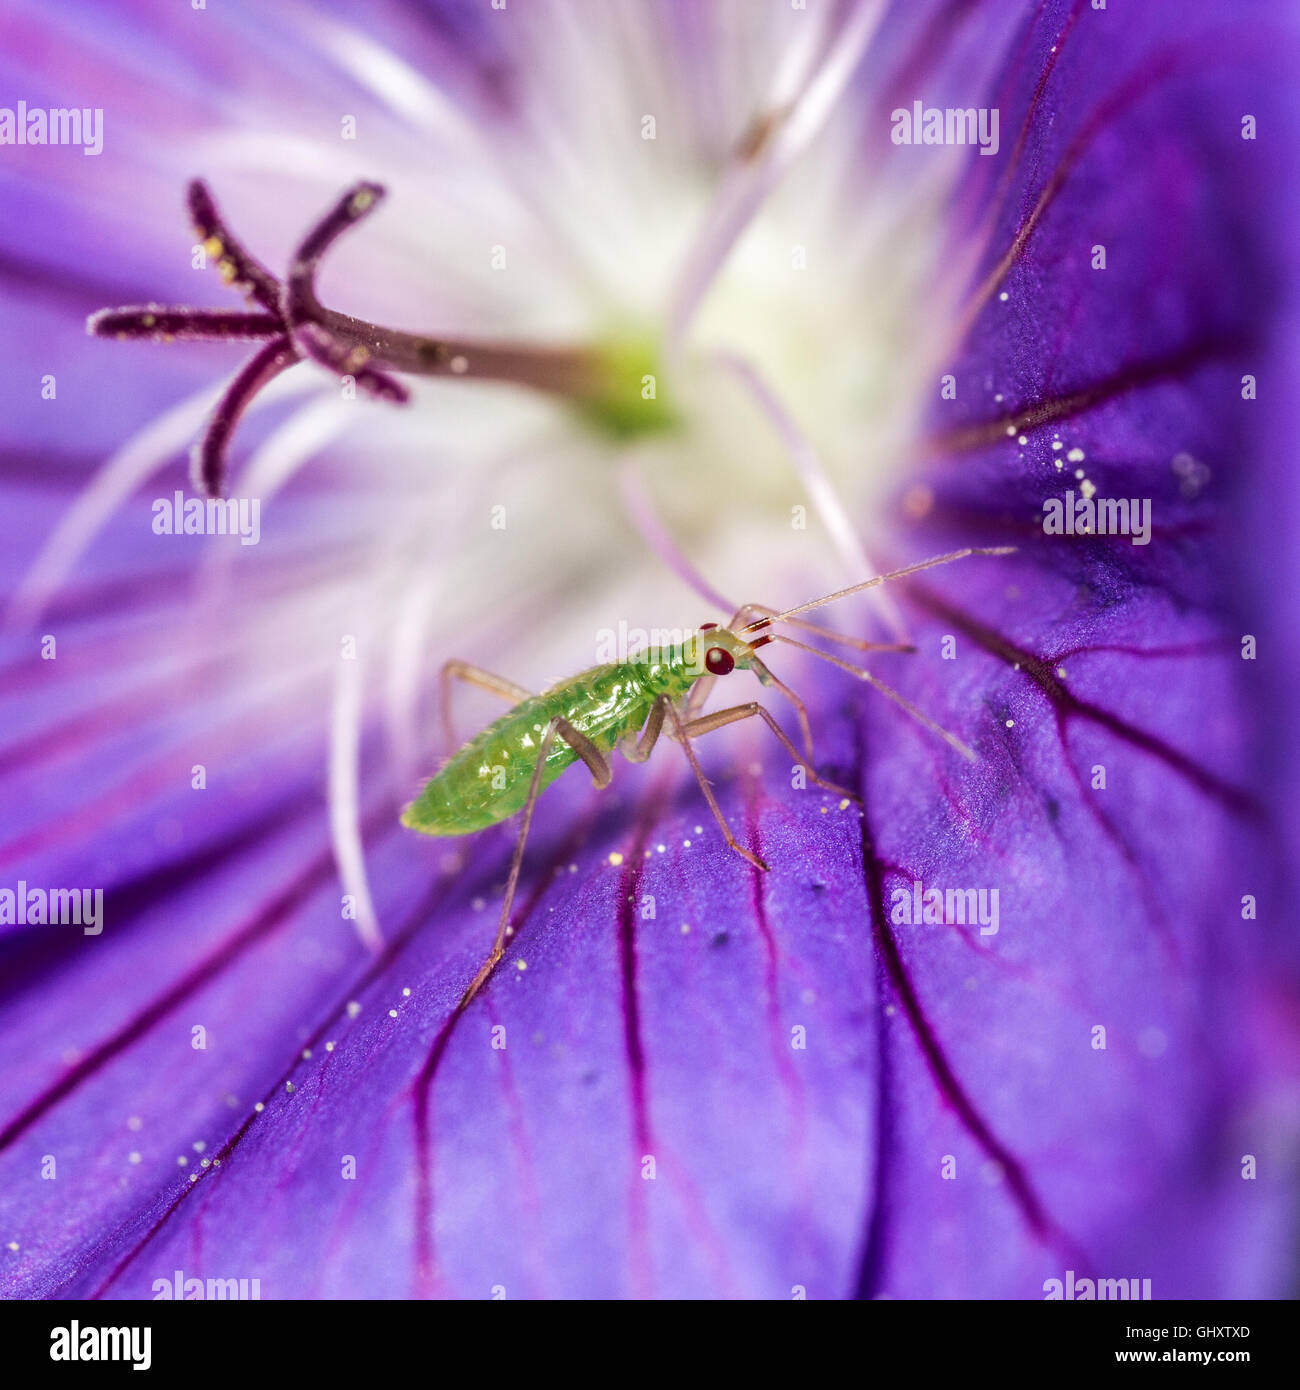 Dicyphus species mirid bug on geranium flower Stock Photo